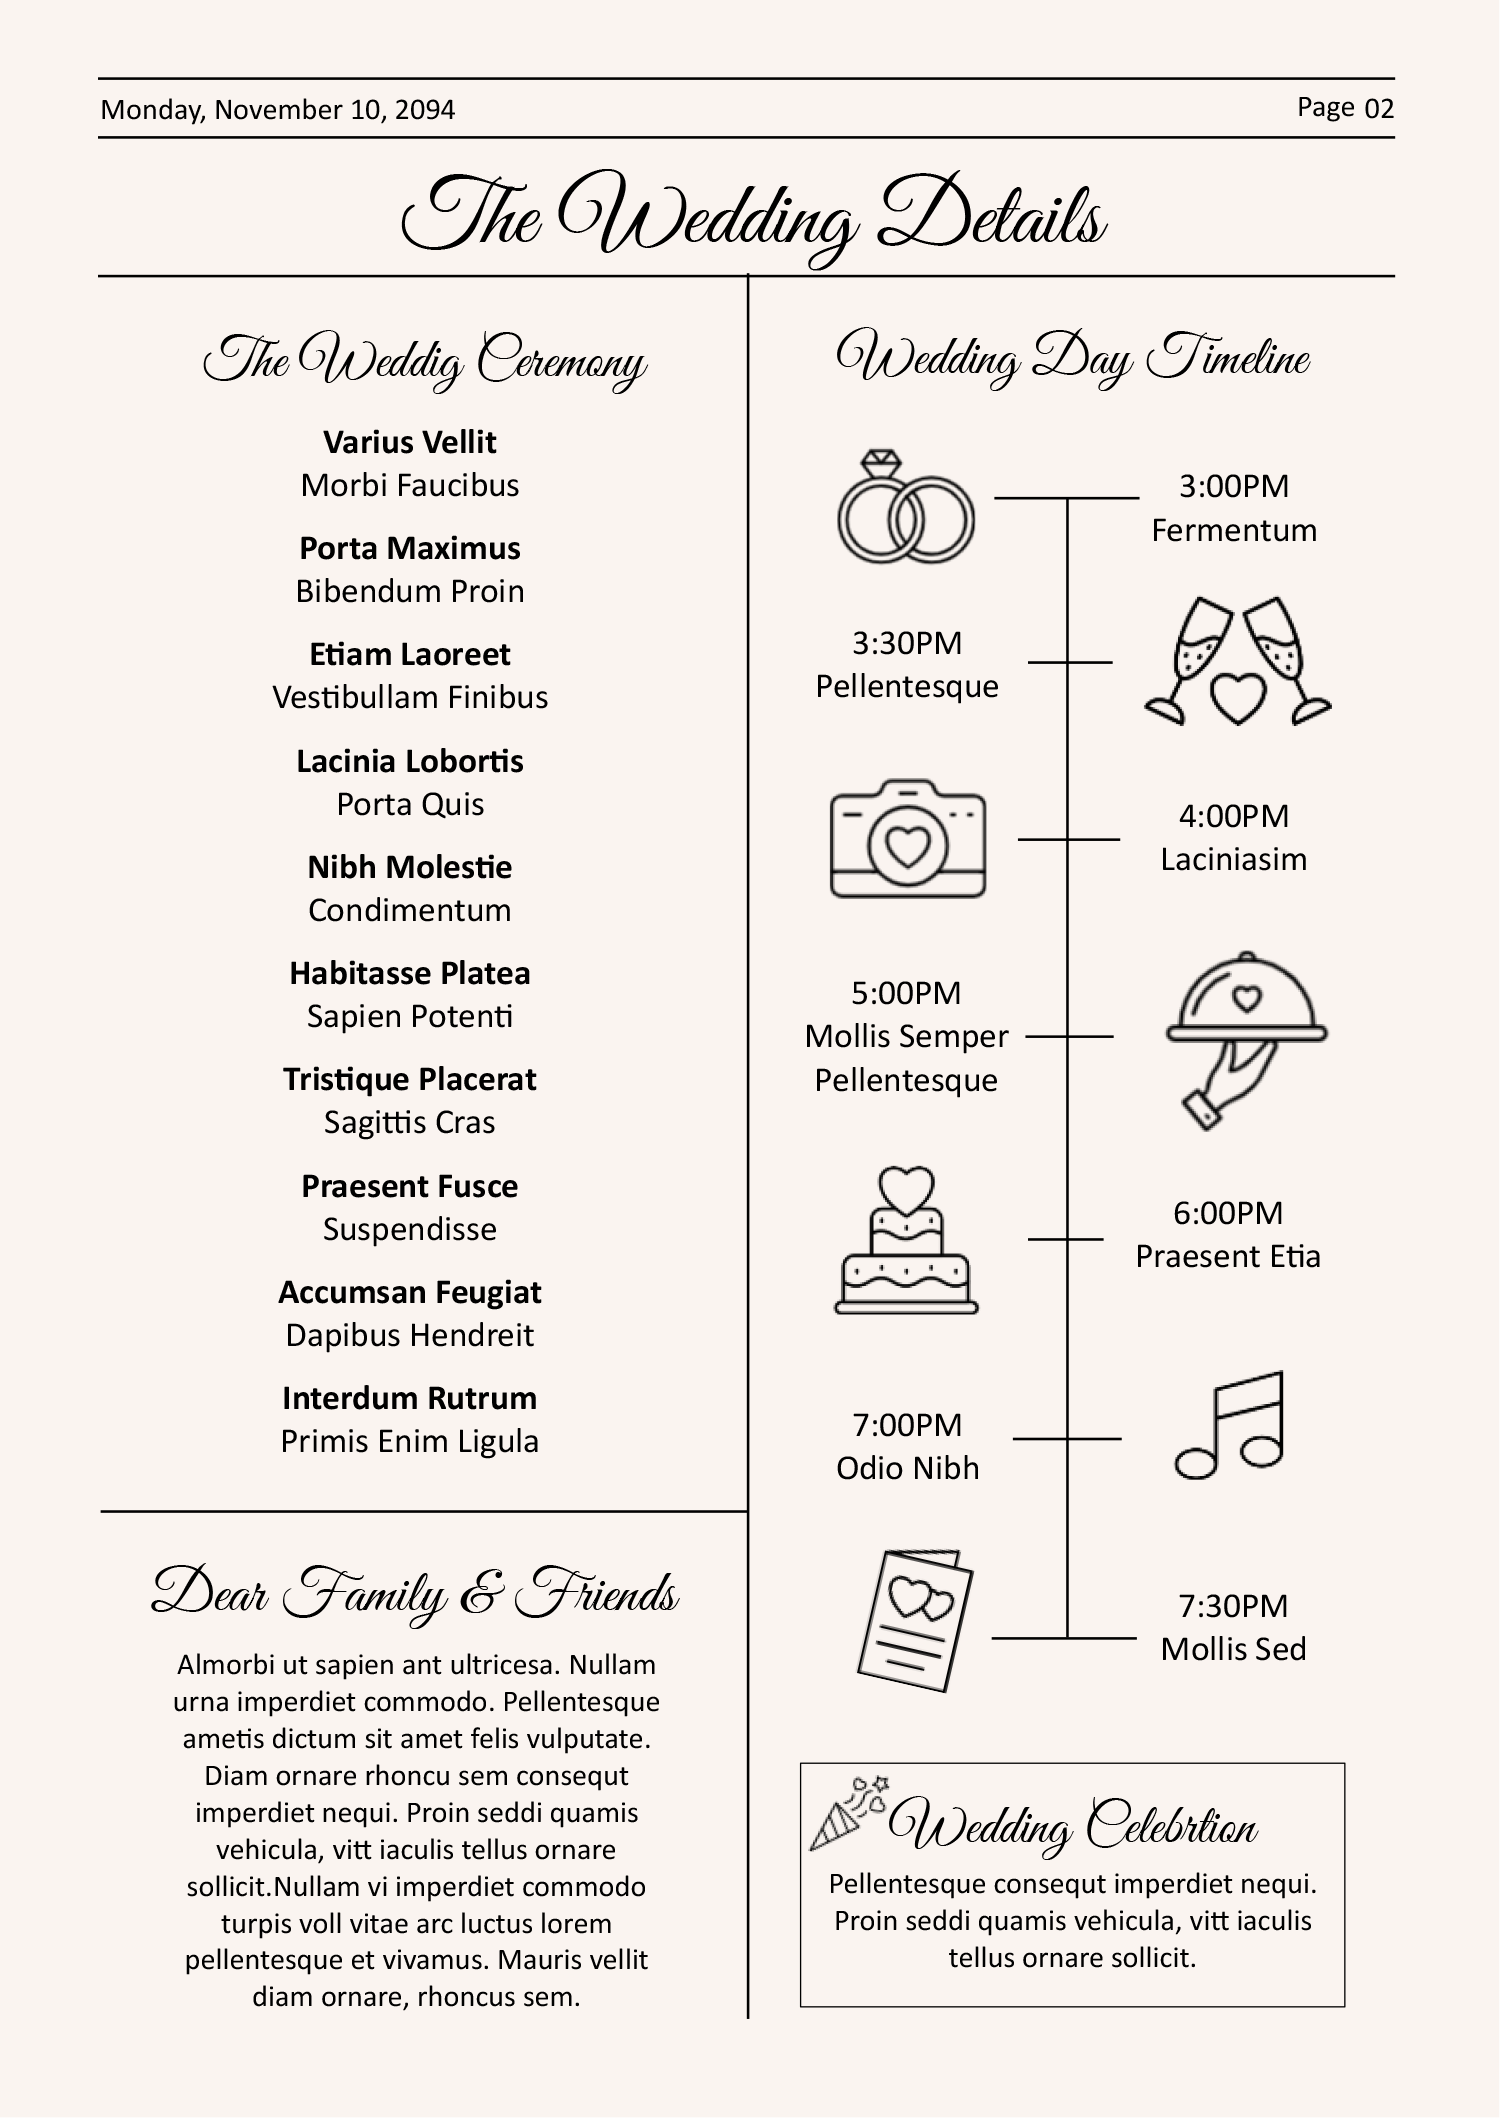 Beige Newspaper Wedding Program Template - Page 02